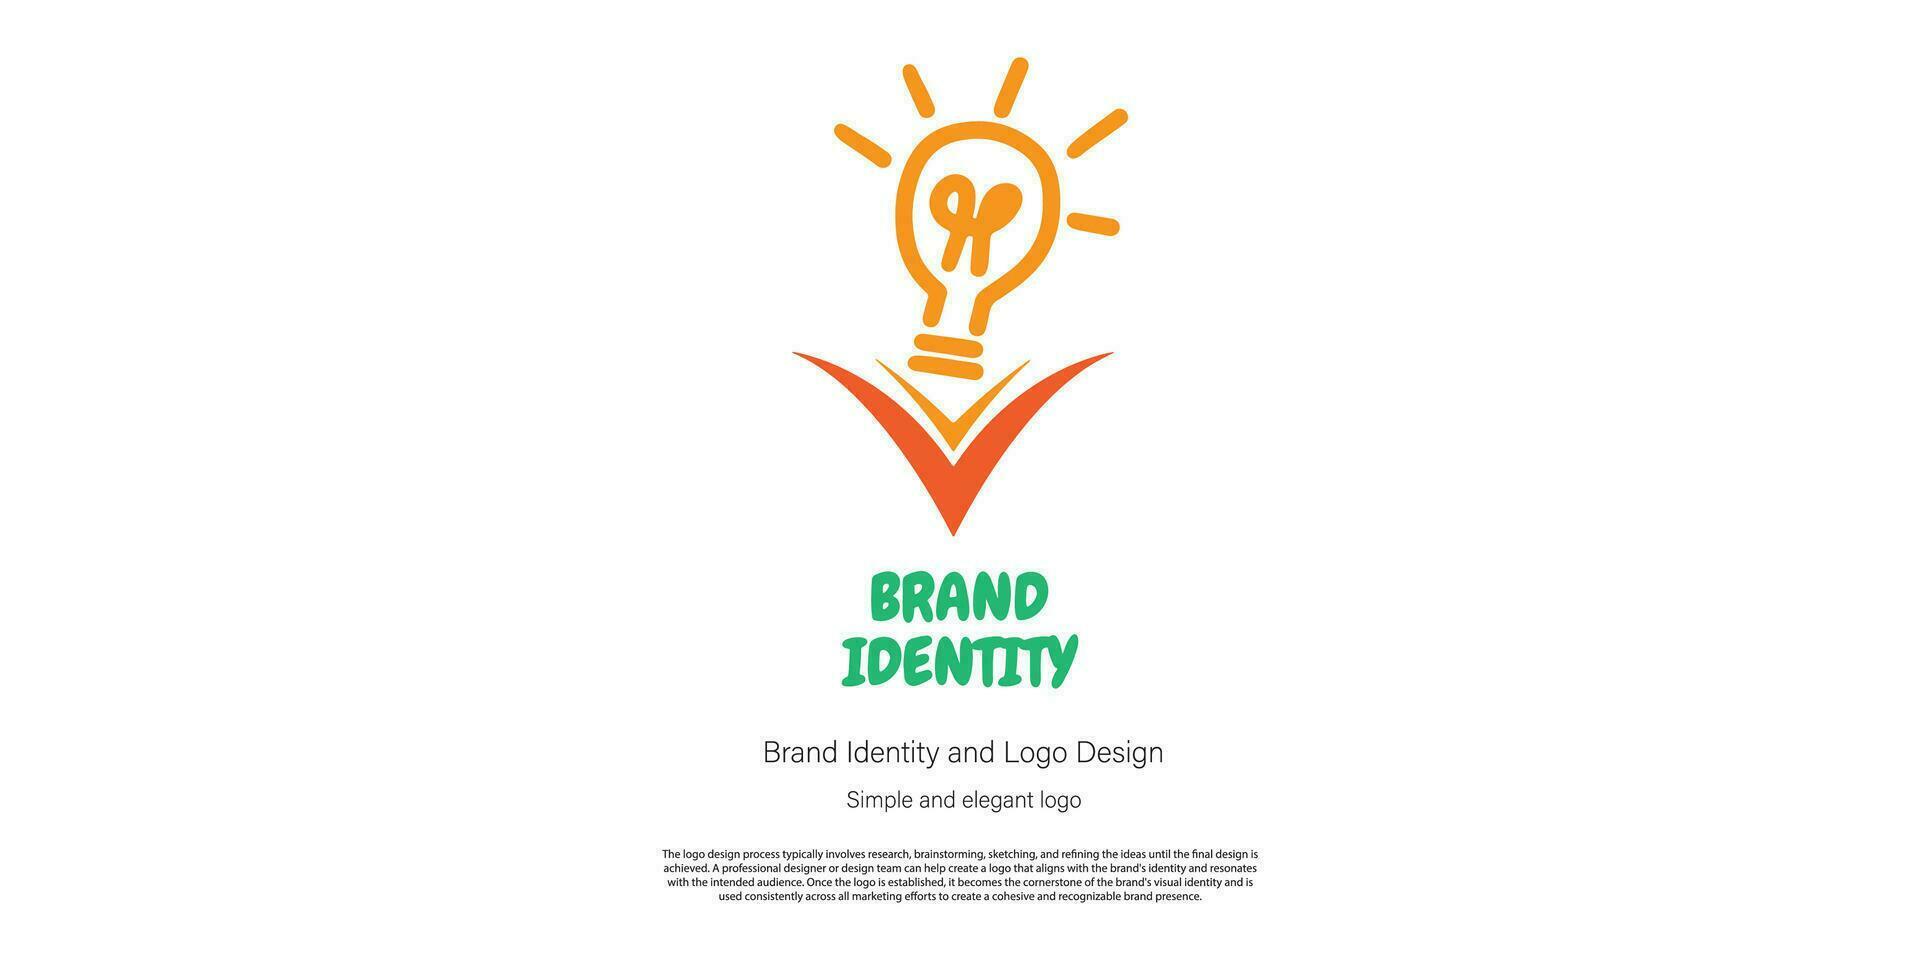 education and study logo design for graphic designer or web developer vector